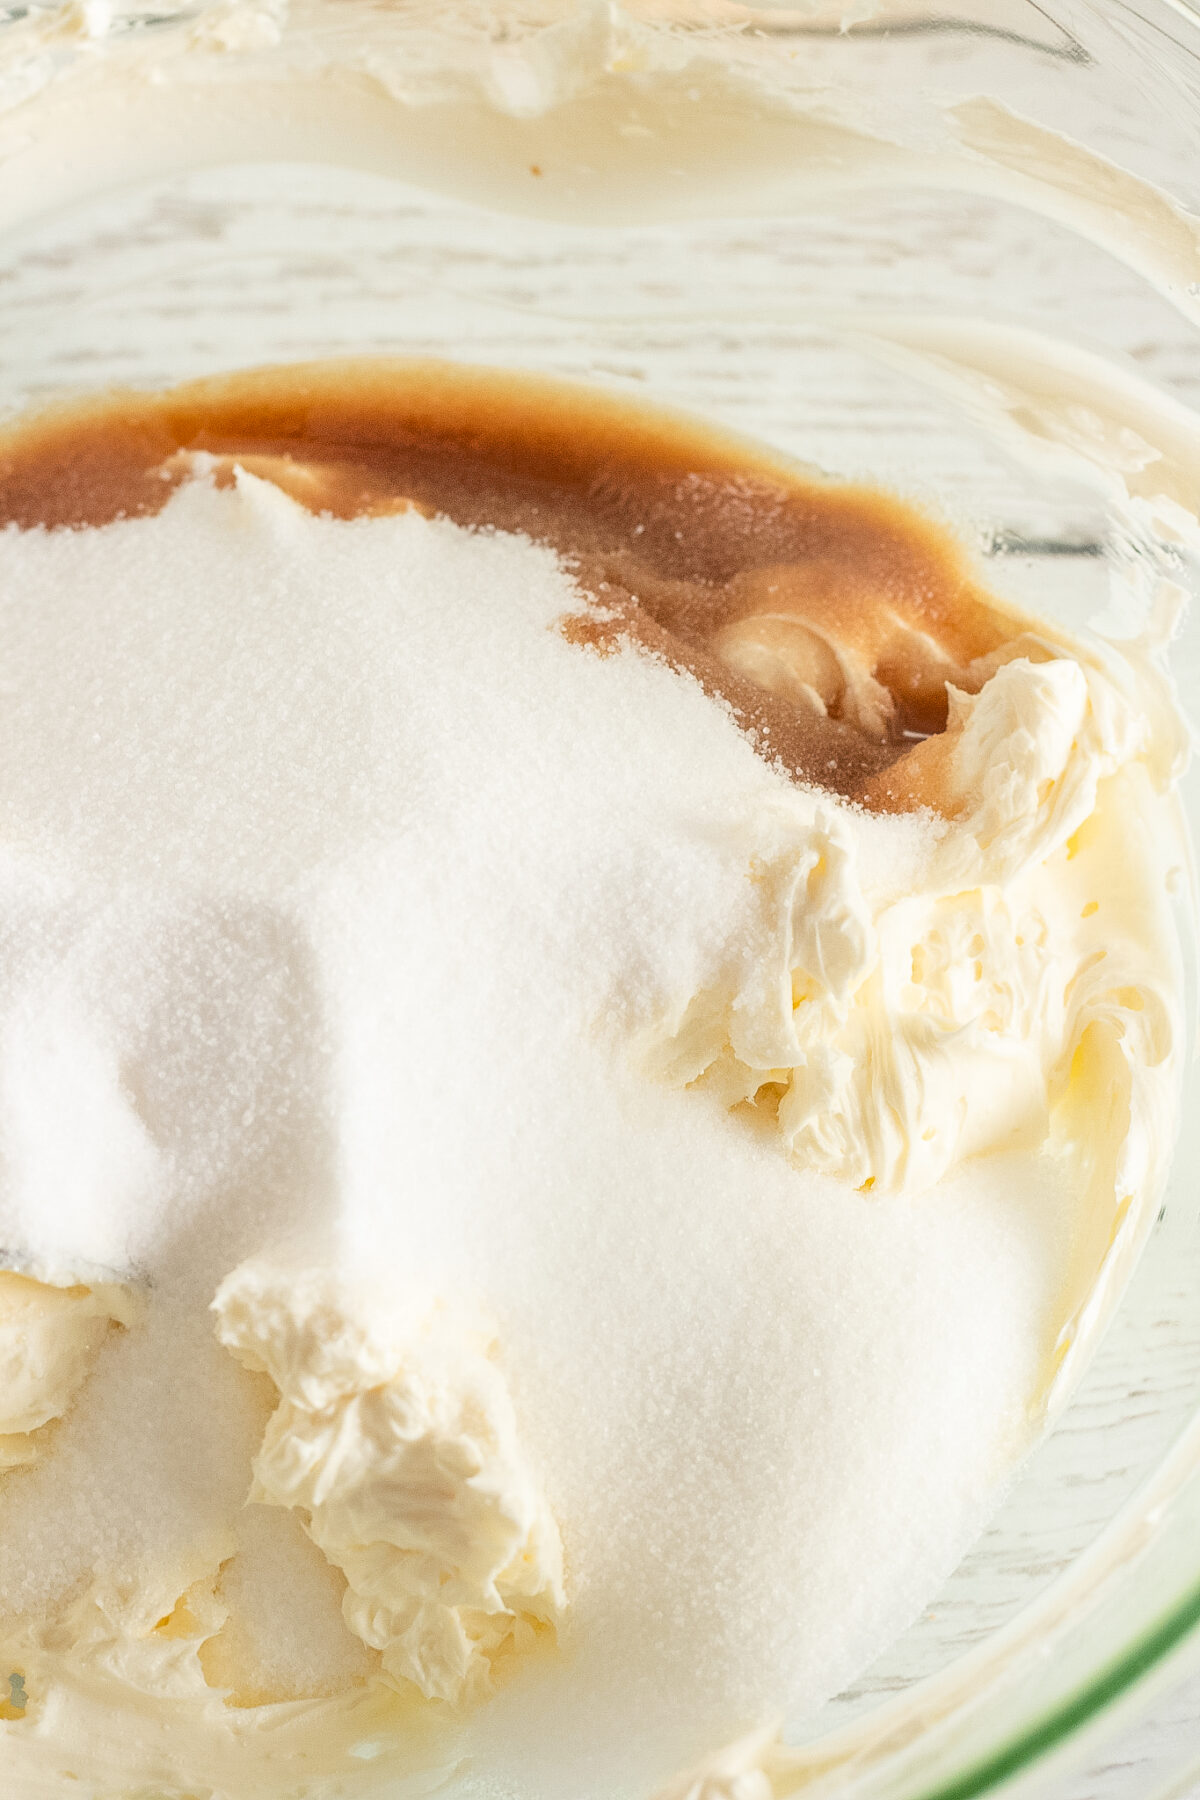 Sugar, salt, vanilla poured into the cream cheese.